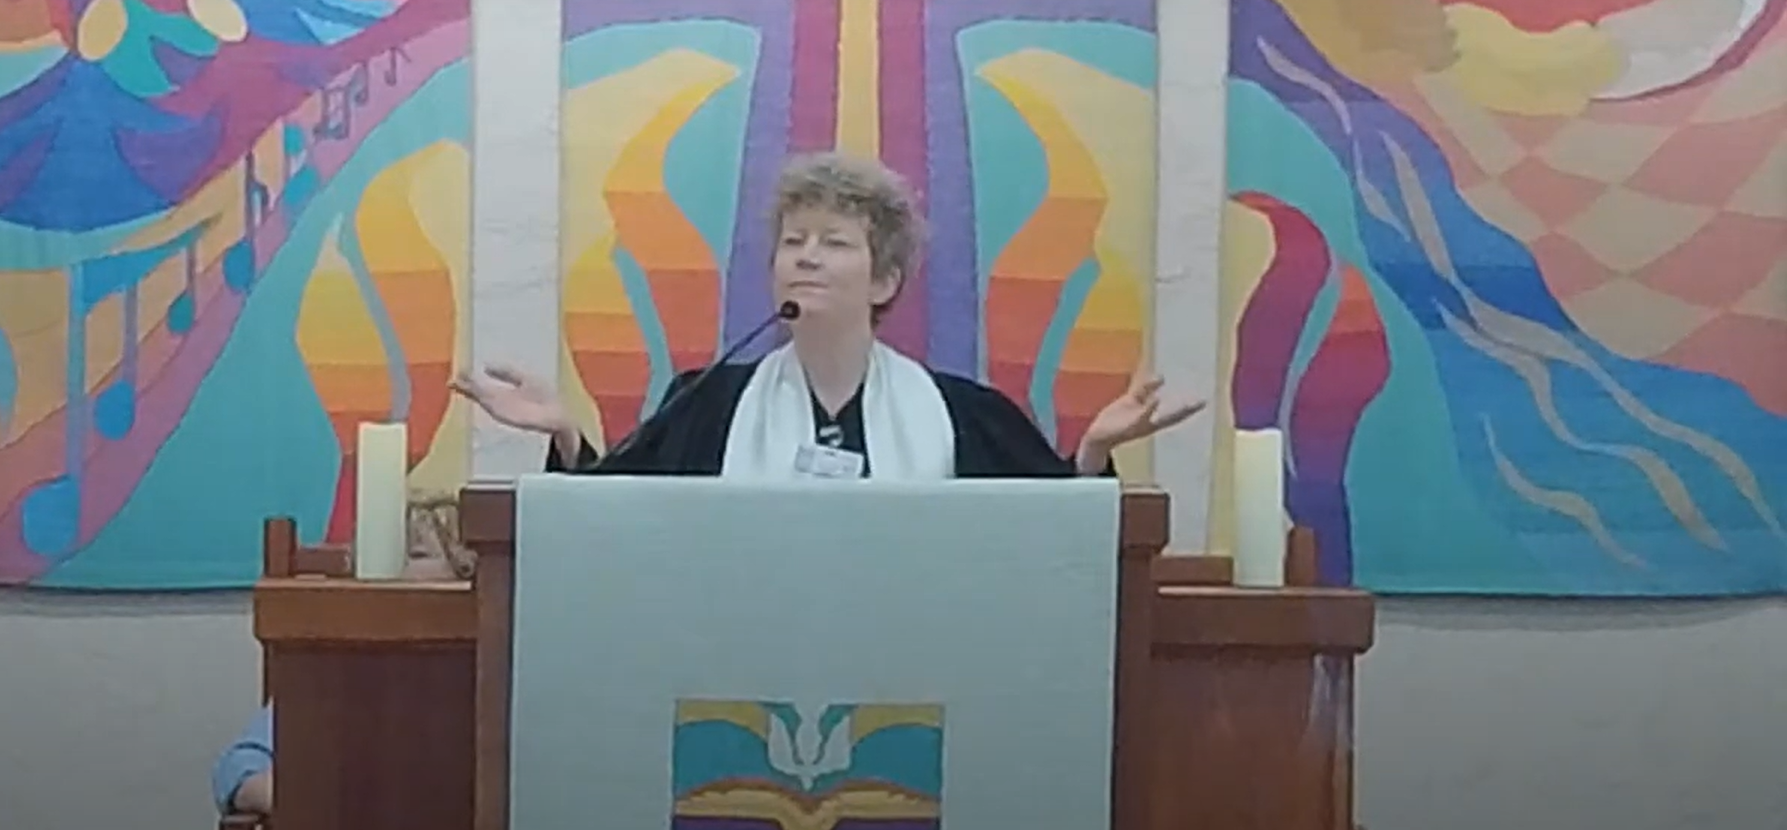 Pastor Elizabeth leads worship